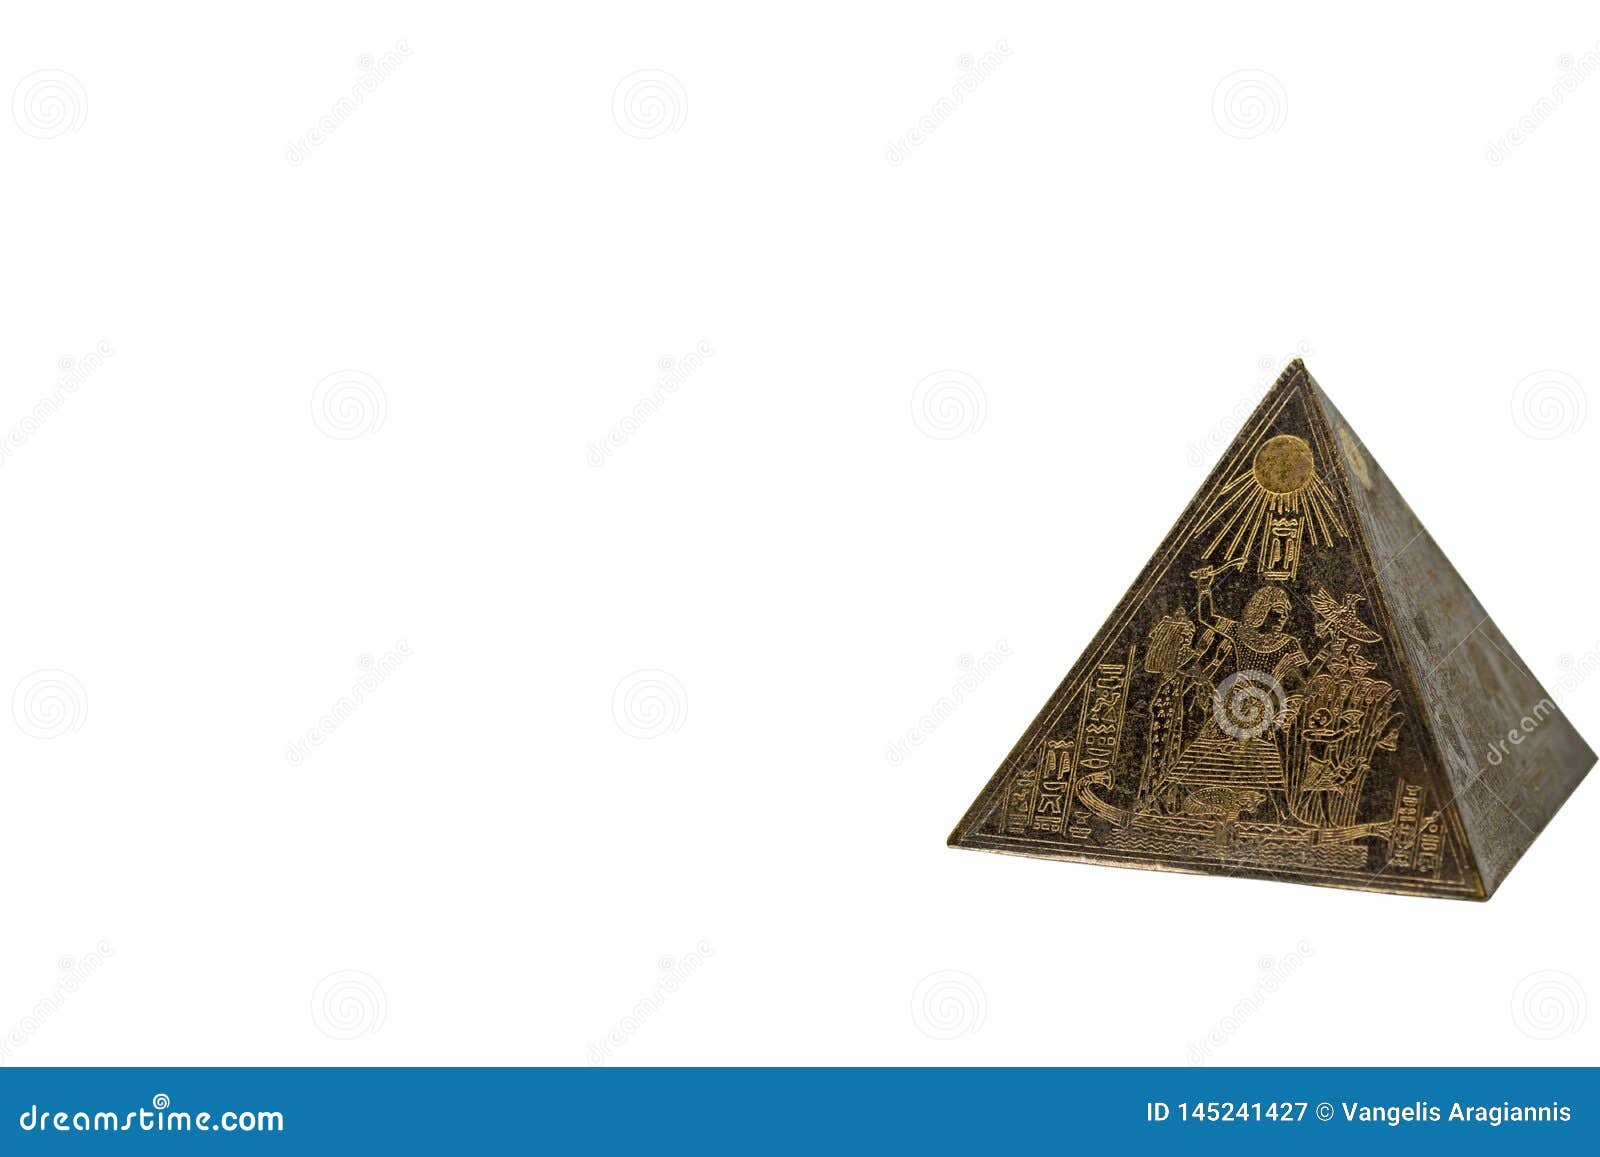 Figurine of Bronze Egyptian Pyramid Stock Image - Image of egyptian ...